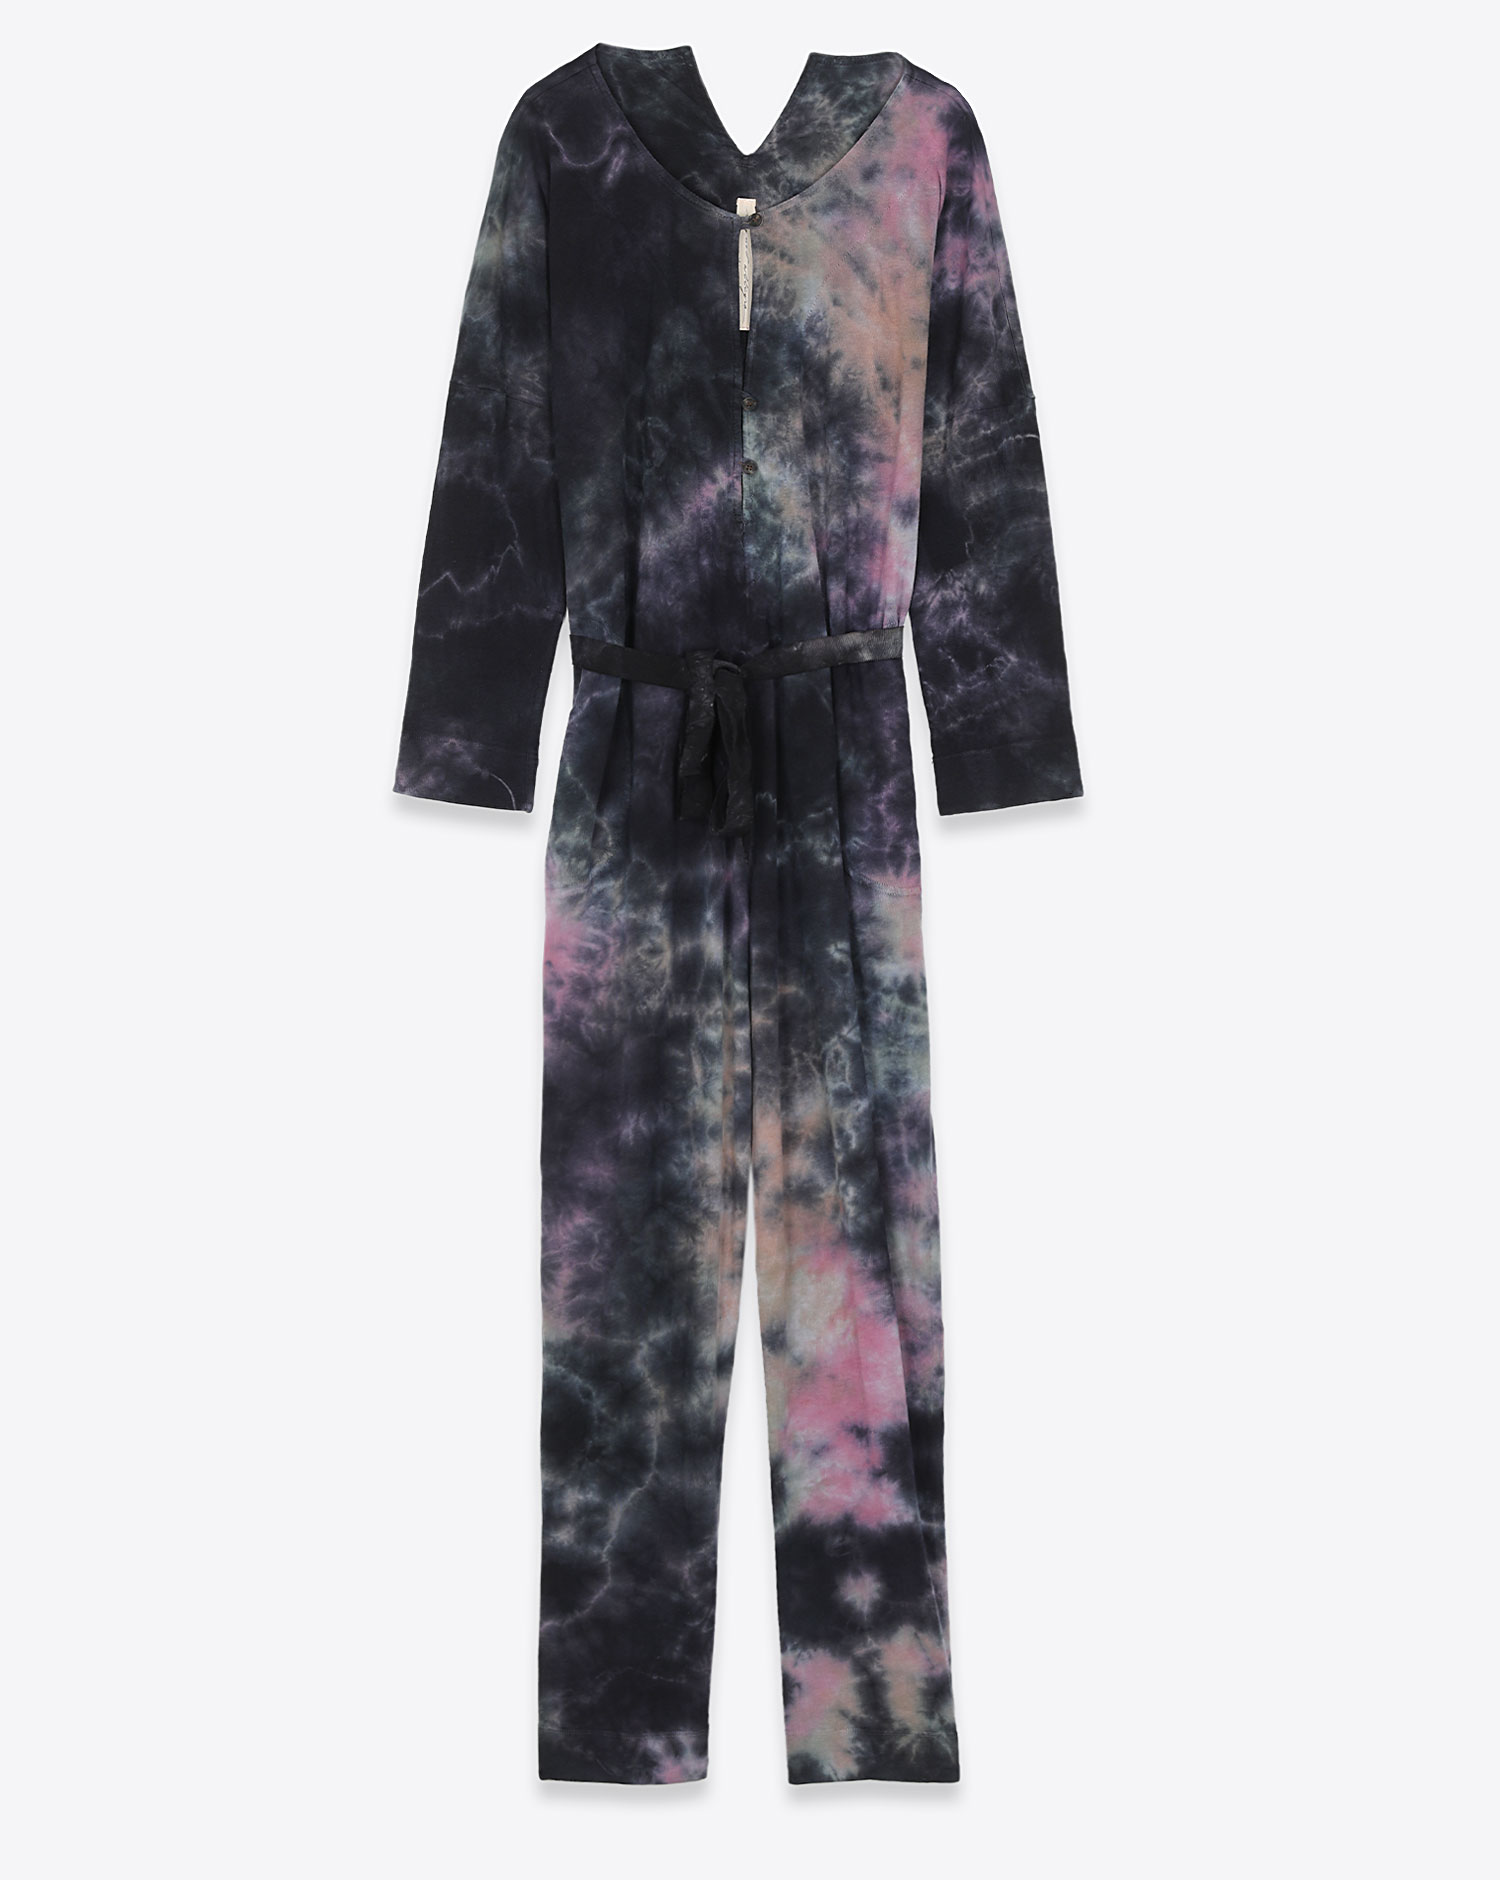 Combinaison Flight Suit Nebula Raquel Allegra Tie and Dye. 